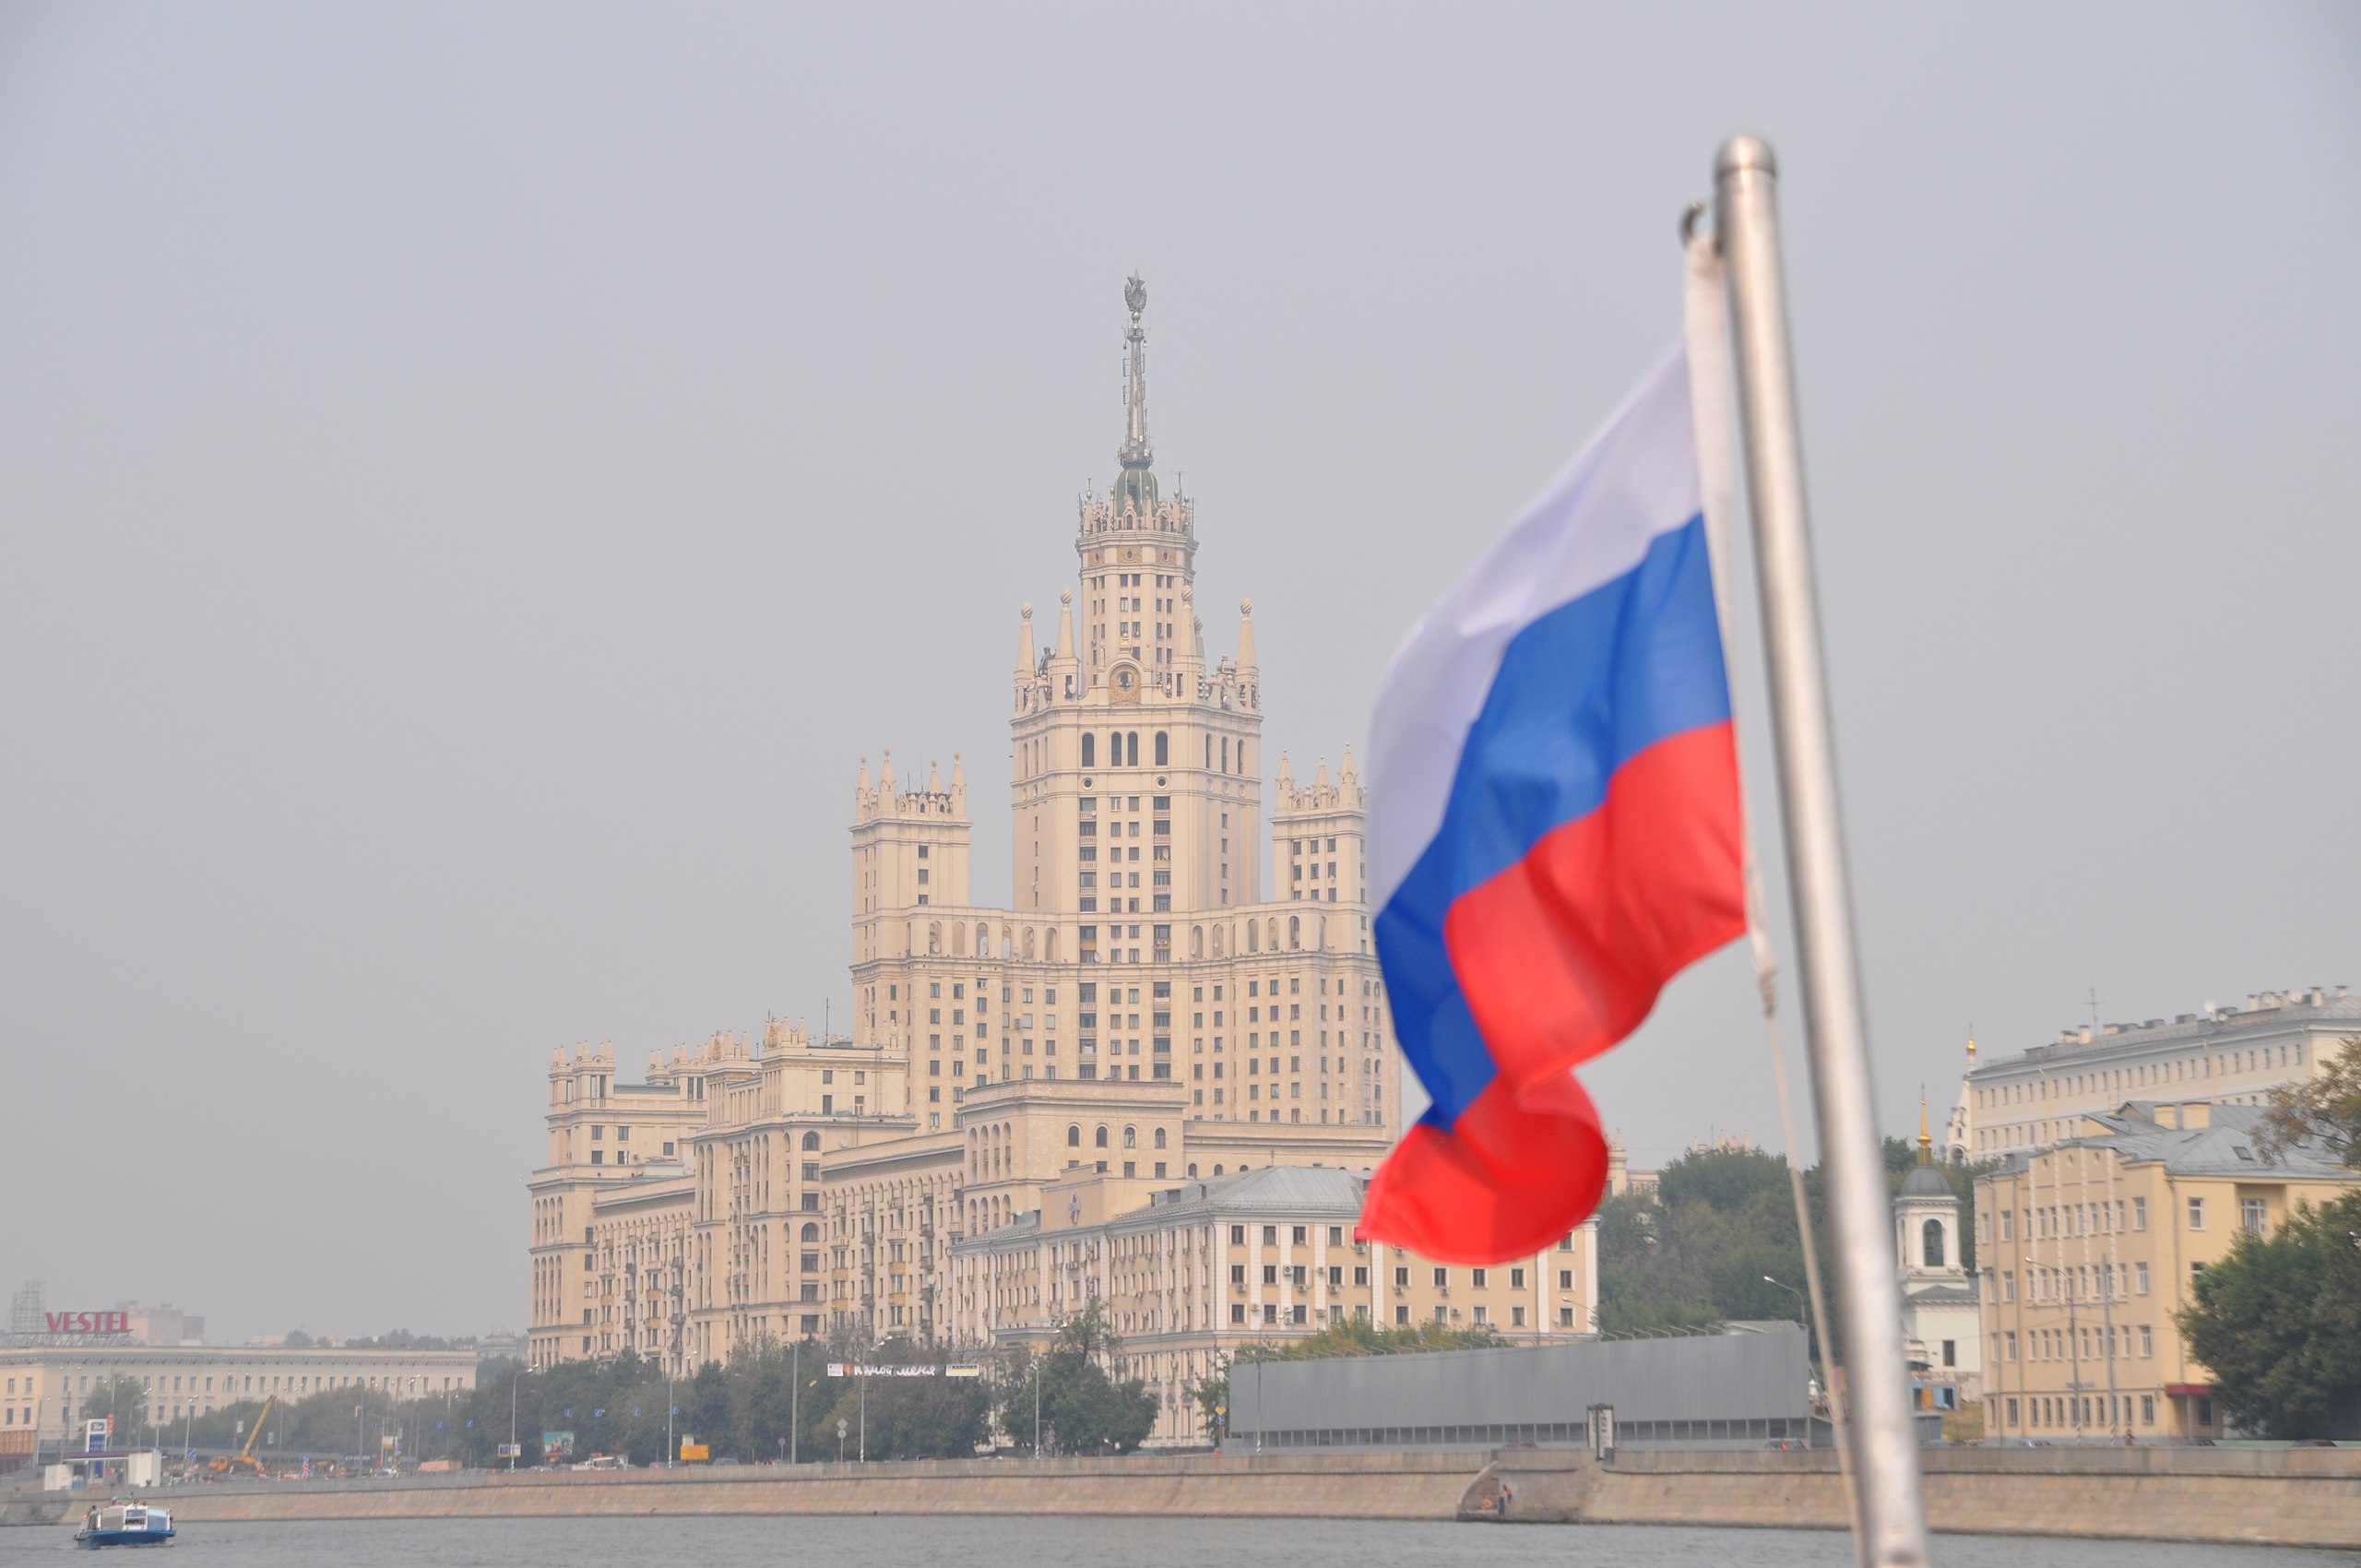 "File:Russland-Flagge-Moskau.jpg" by Schlurcher is licensed under CC BY 3.0.